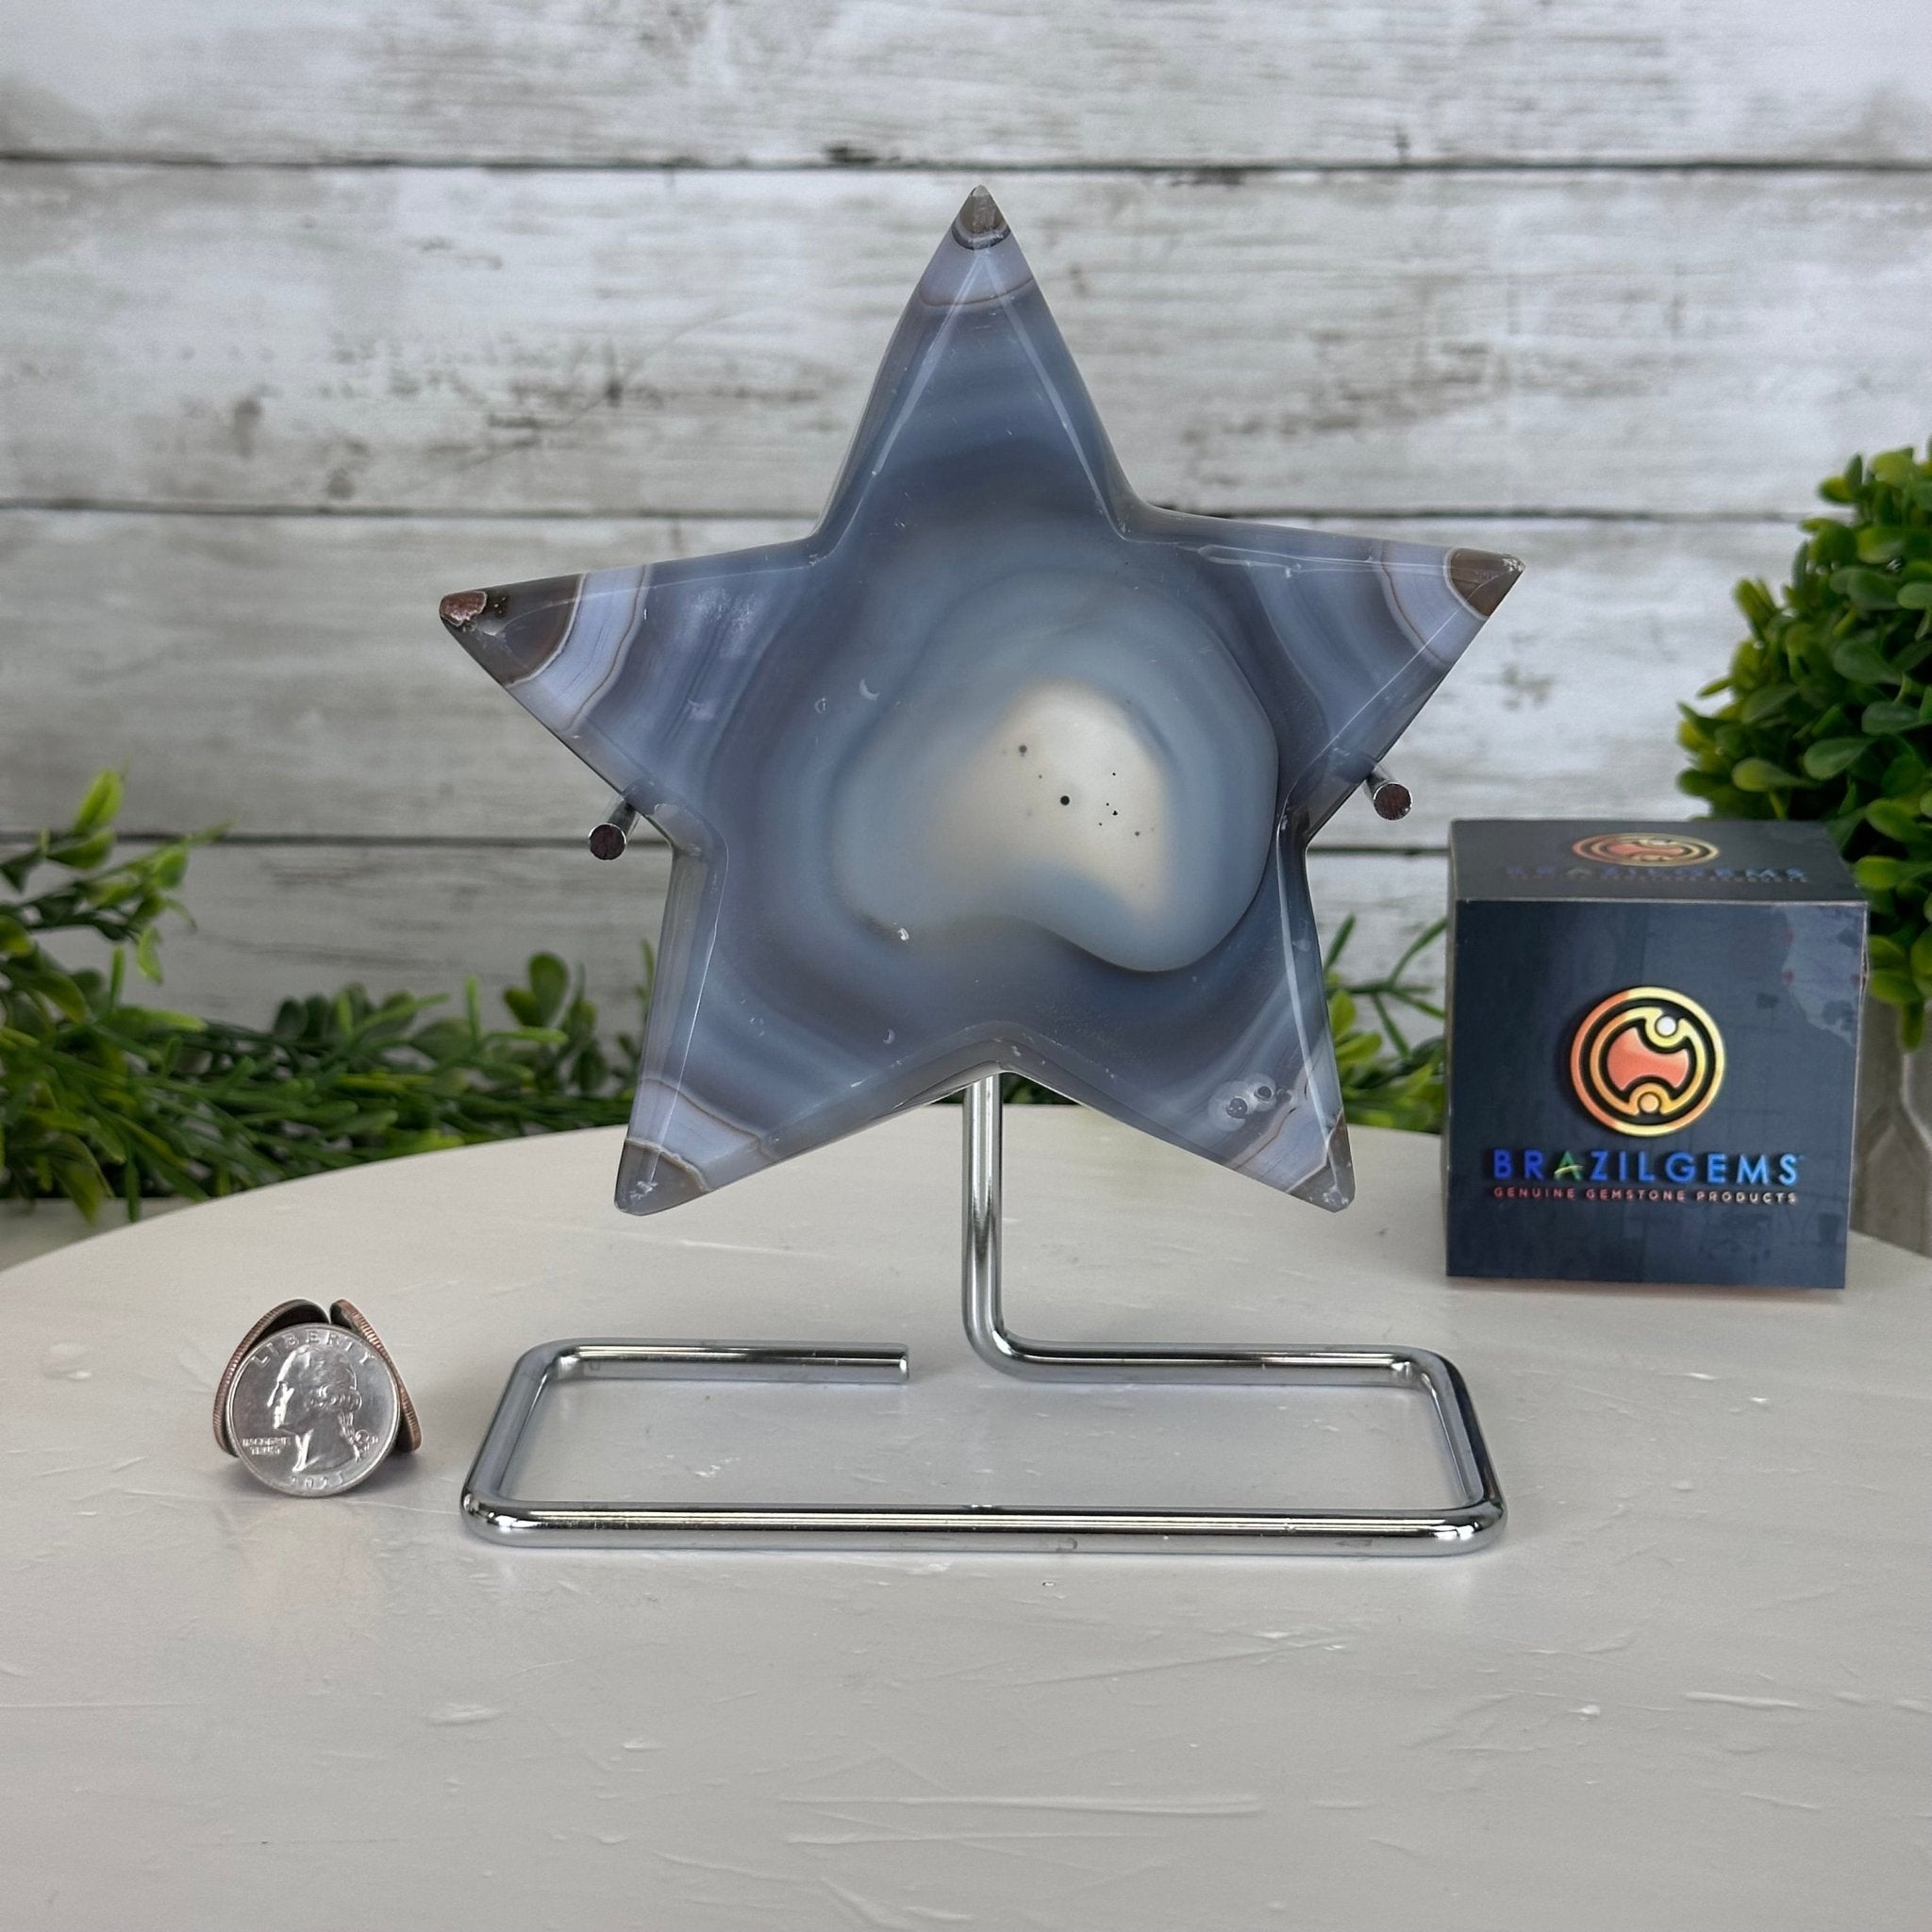 Polished Agate Star on a Metal Stand, 2.5 lbs & 7.1" Tall #5273-0013 - Brazil GemsBrazil GemsPolished Agate Star on a Metal Stand, 2.5 lbs & 7.1" Tall #5273-0013Stars5273-0013